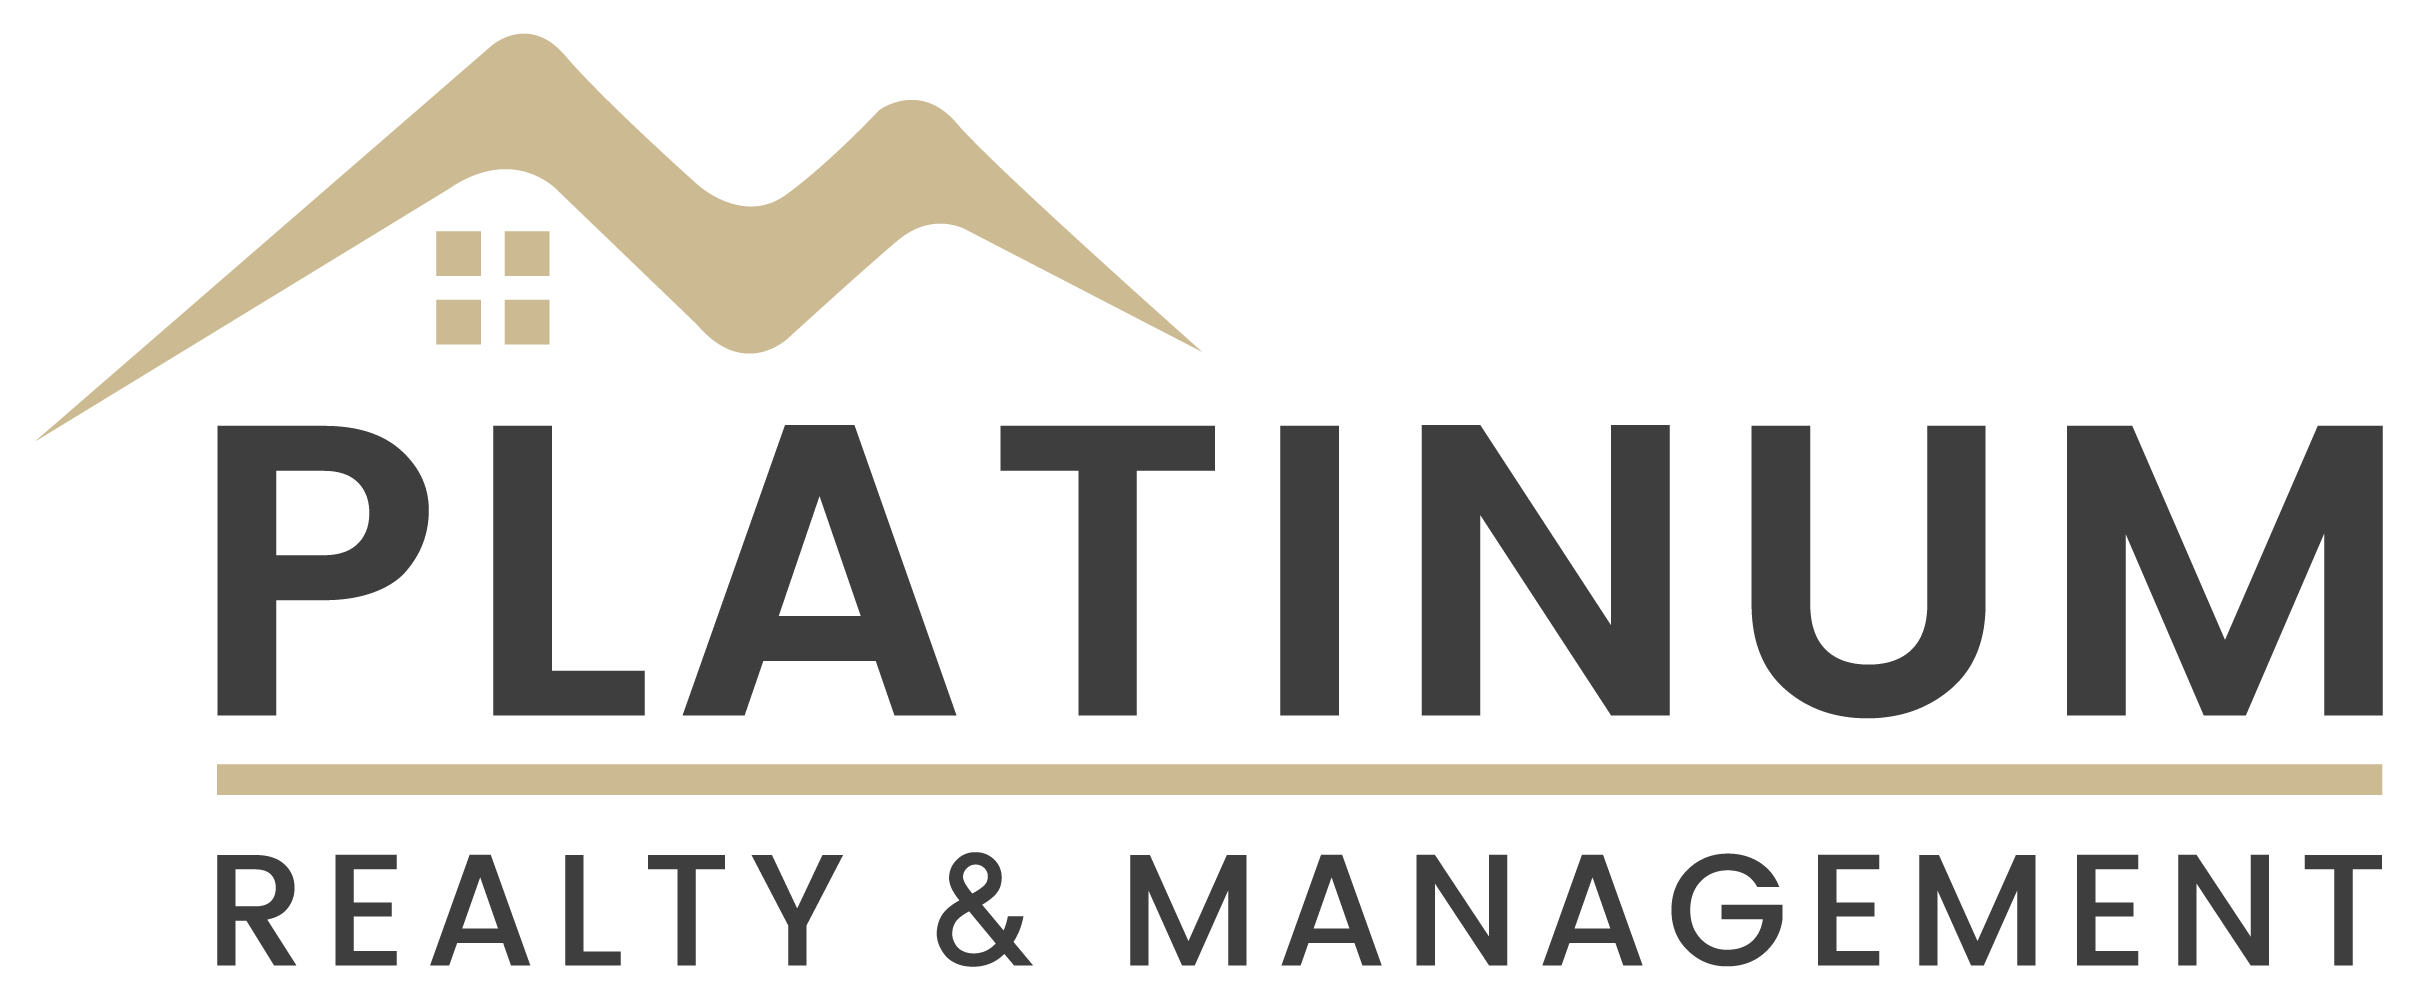 Platinum Realty & Management - Customer of MidTenn Alarms - Clarksville, TN